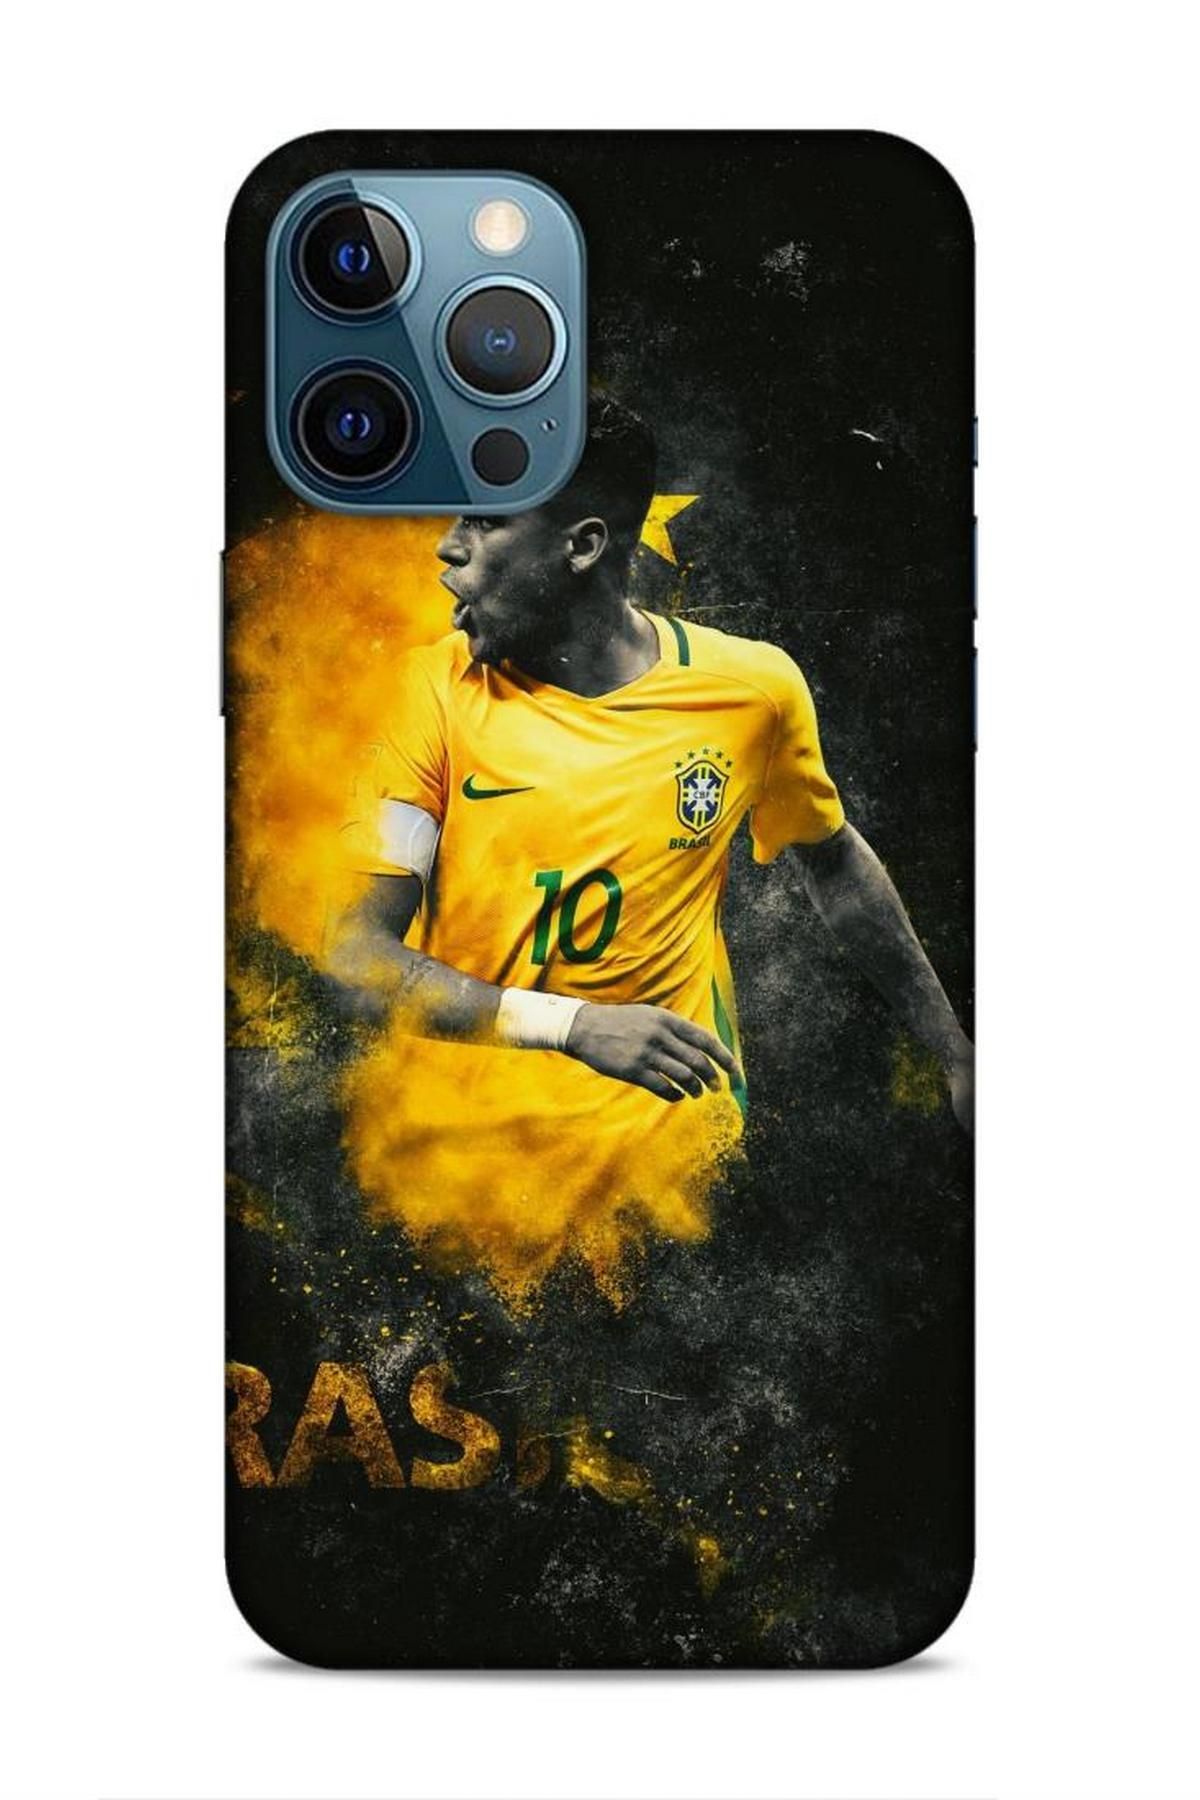 Lopard Apple iPhone 12 Pro Max Gess Futbolcular 20 JR Neymar Sarı Renkli Kılıf